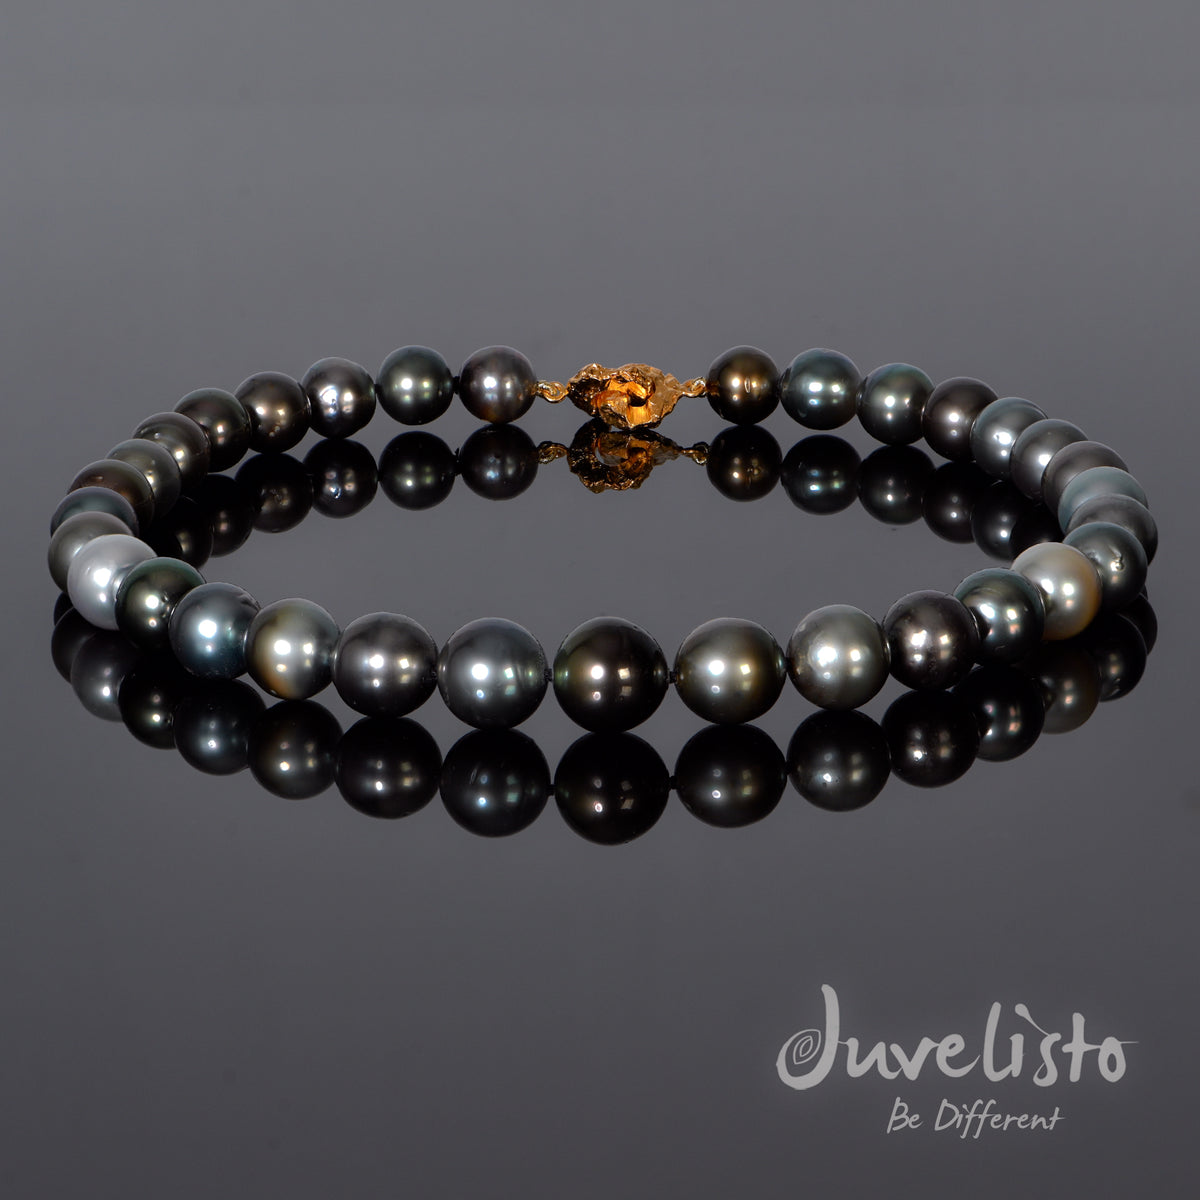 Juvelisto Design | Tahitian Pearls Necklace